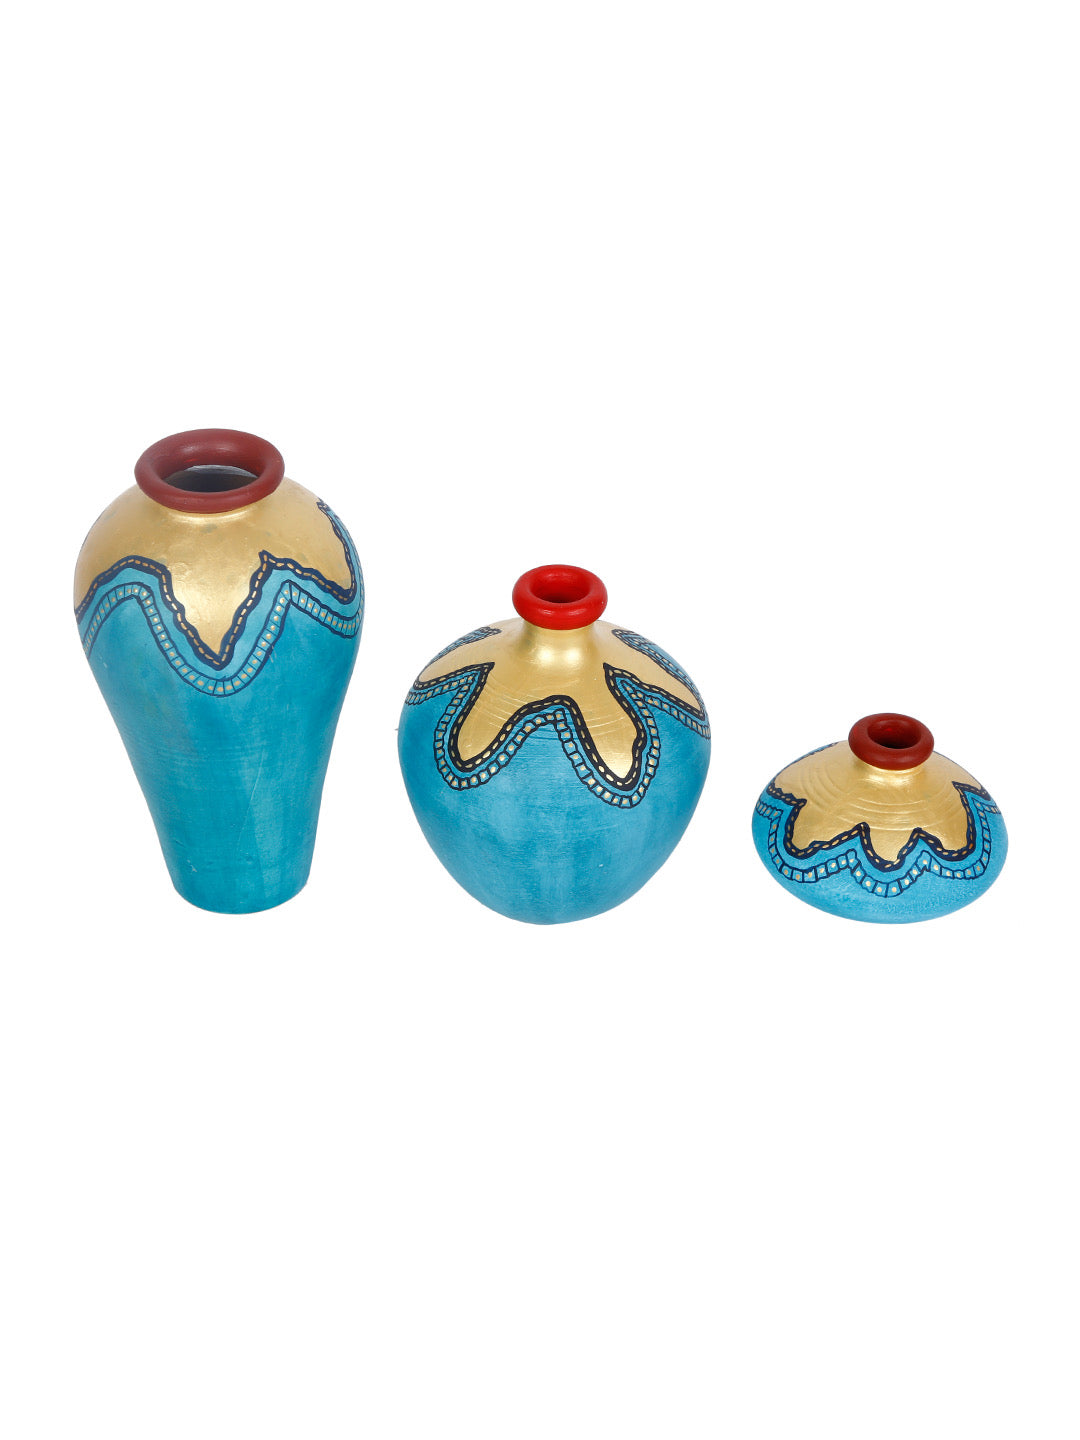 Blue Hand-painted Terracotta Pots Set of 3 - Default Title (TCVASA2103_3)